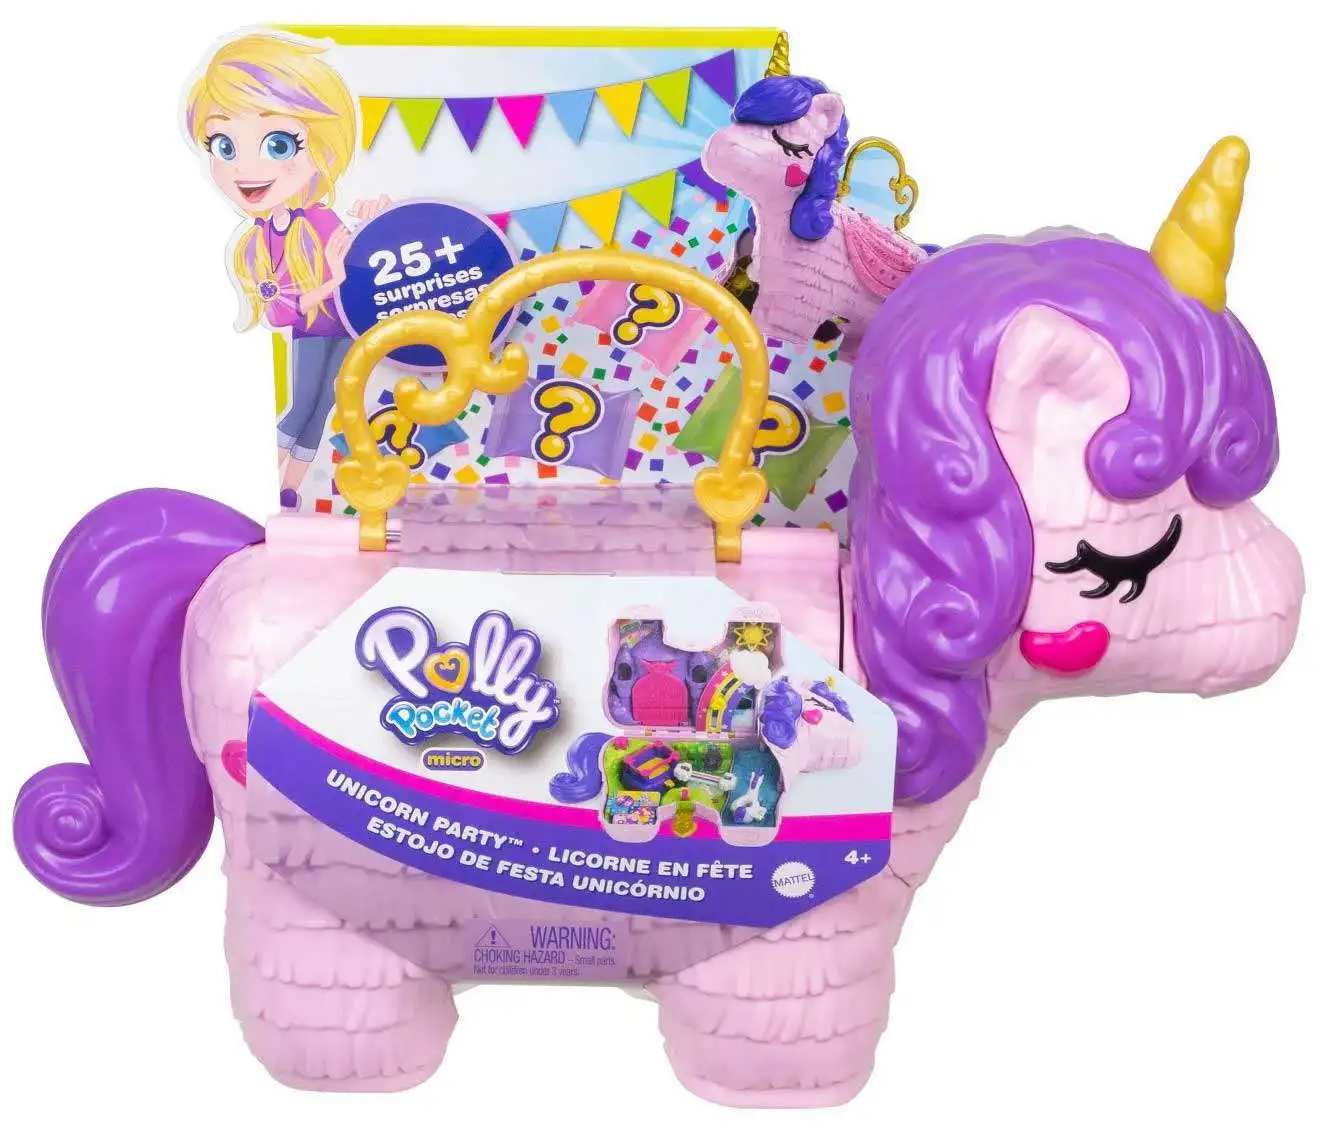 Polly Pocket Unicorn Party Large Compact Playset Mattel Toys - ToyWiz